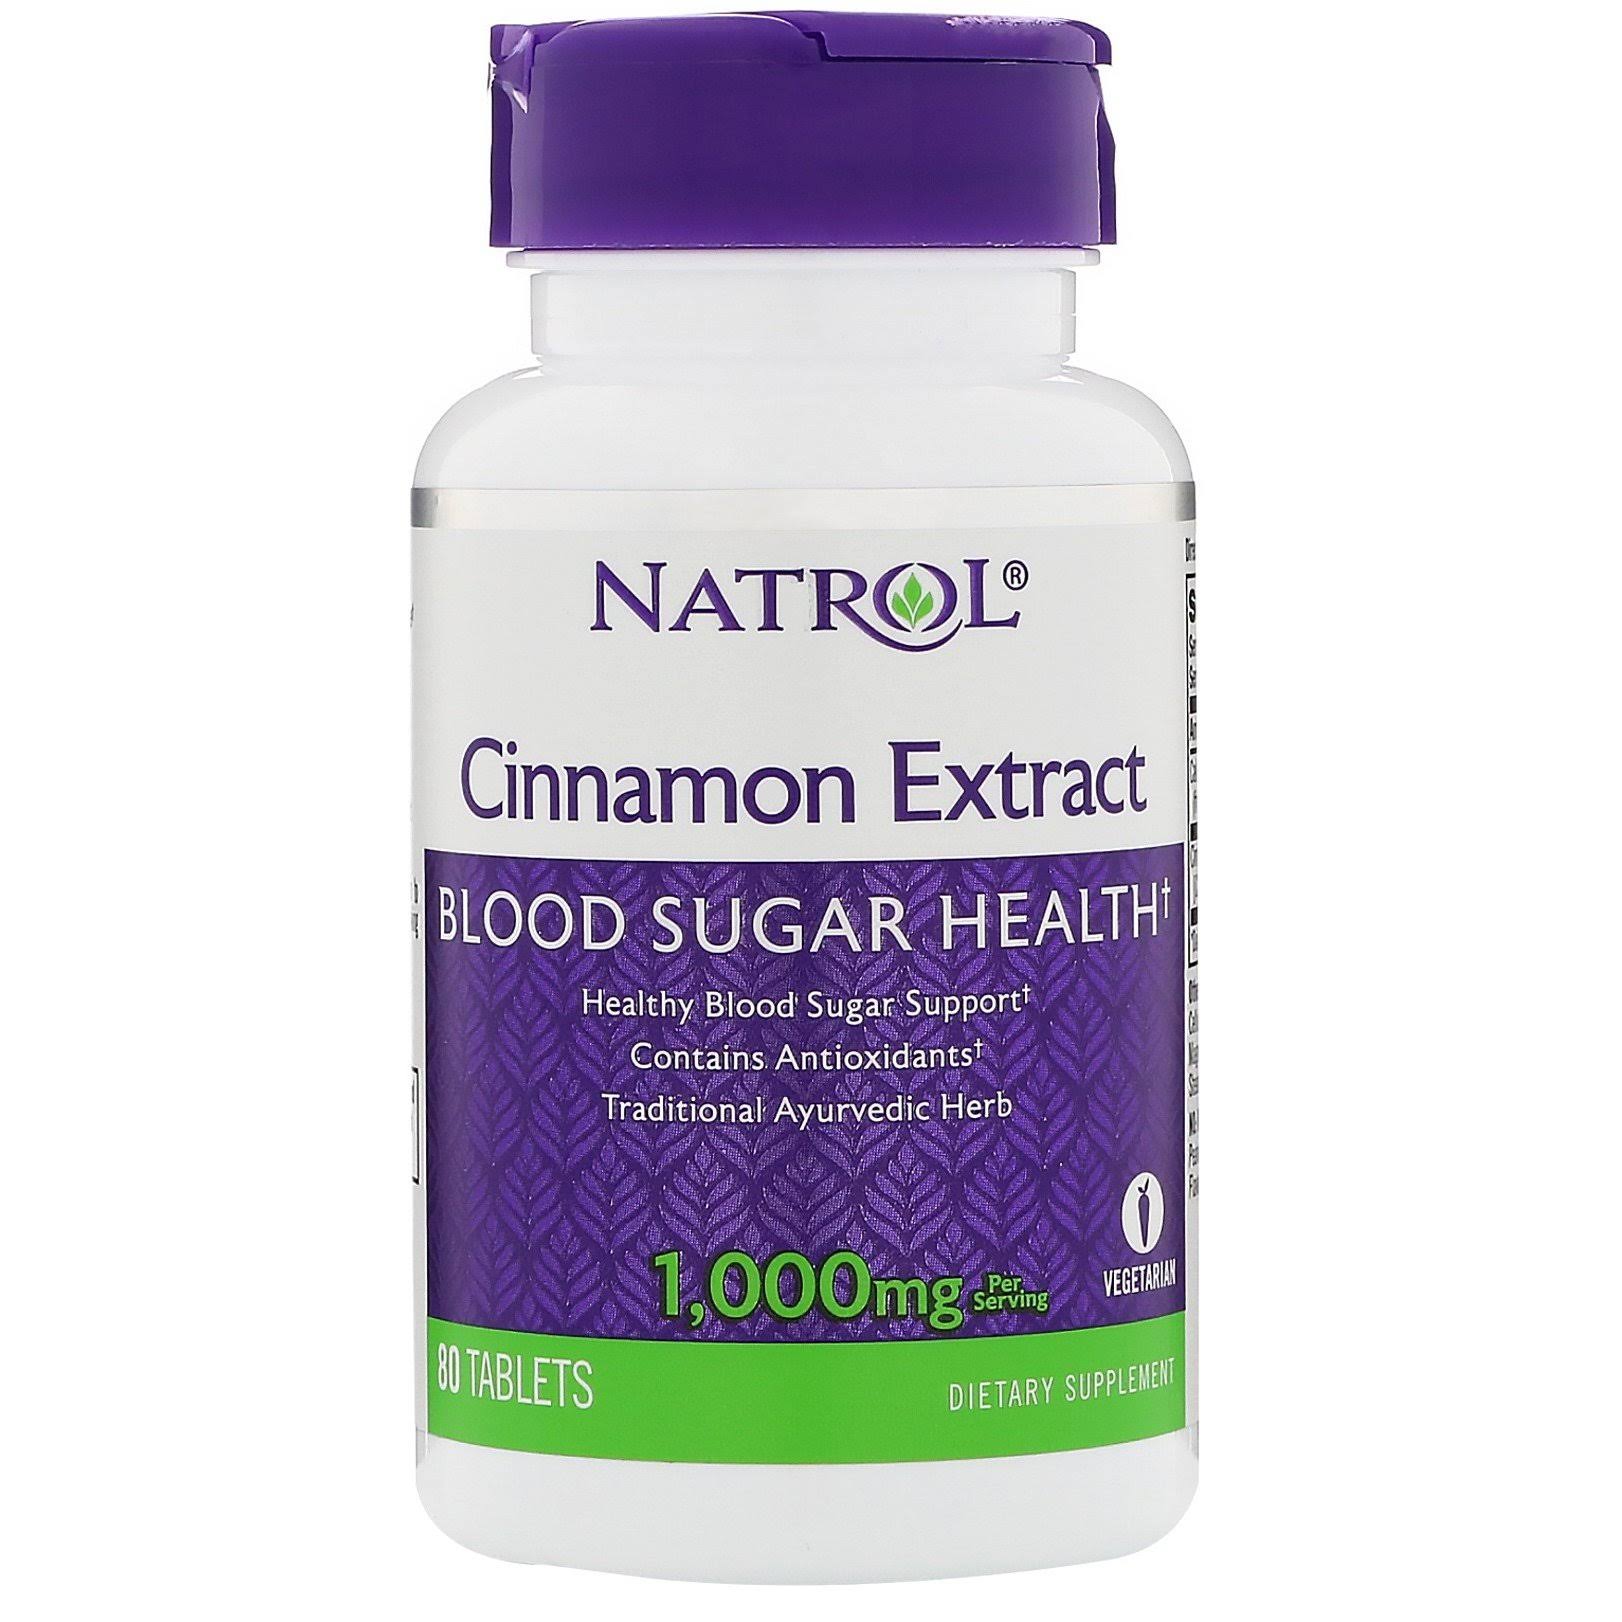 Natrol Cinnamon Extract Dietary Supplement - 1000mg, 80 Tablets